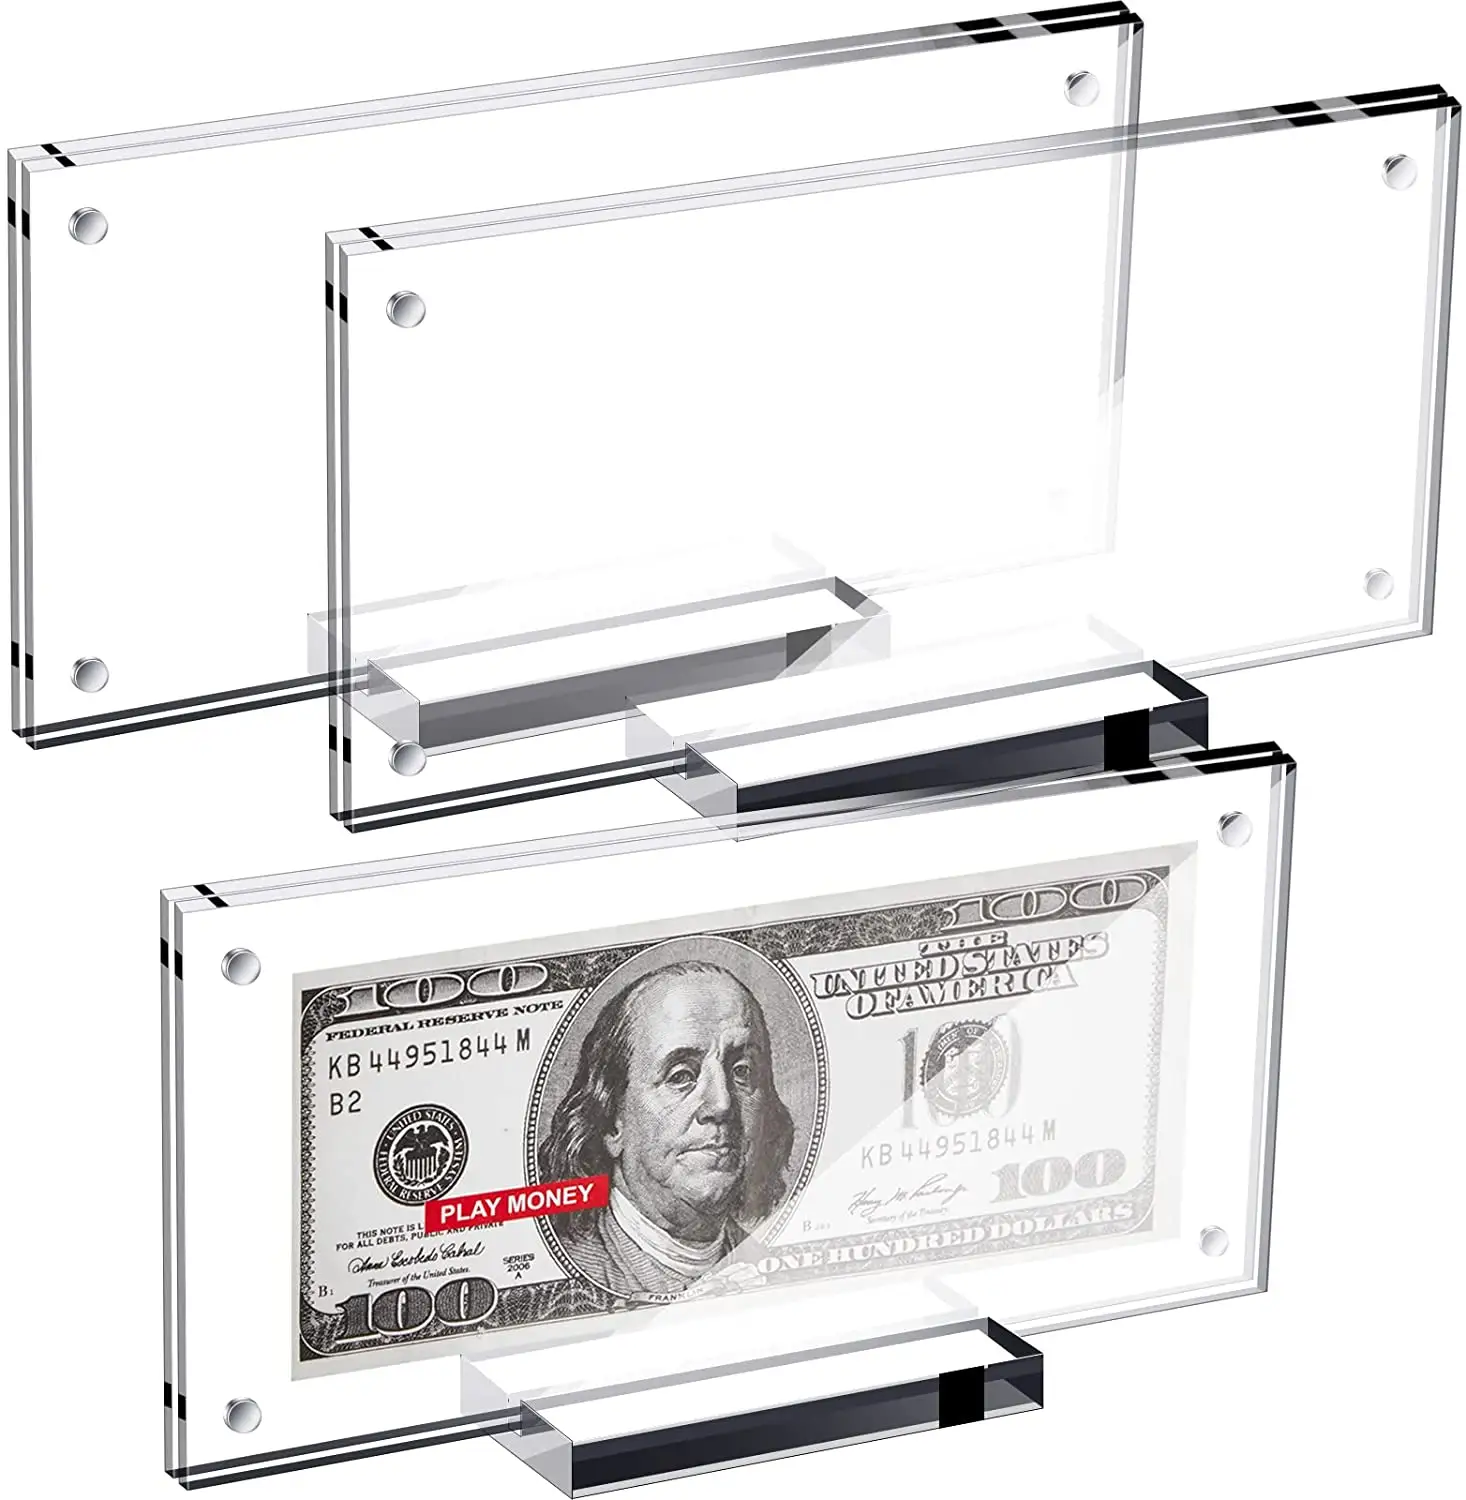 H037 Acryl-Displayst änder, Acryl-Display Dollar Bill Holder Währung Papier Geld Vitrine Geld rahmen für Bill Protector